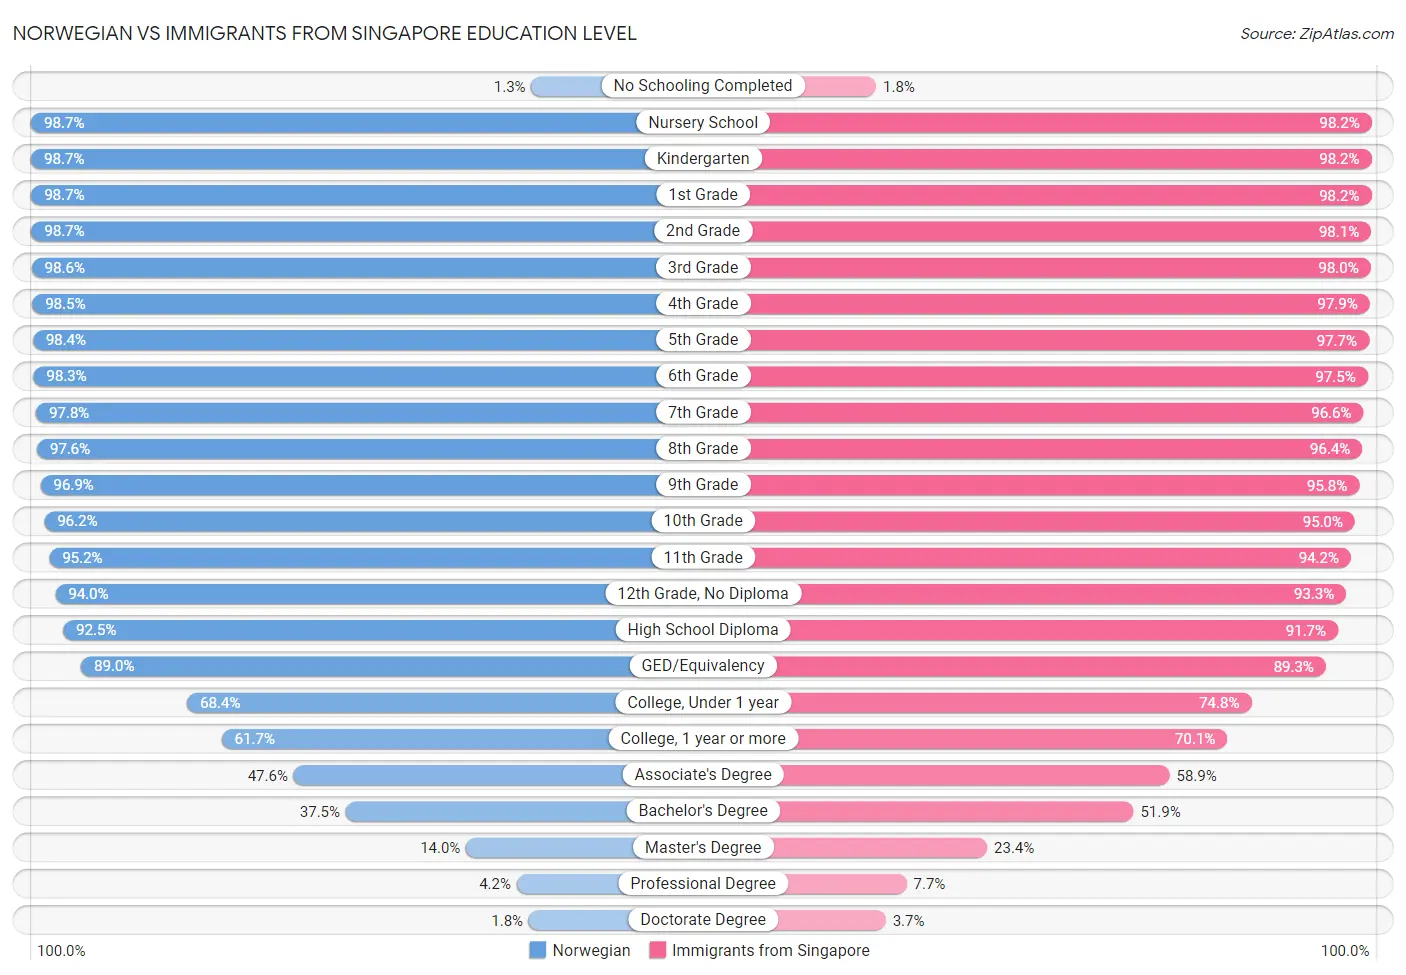 Norwegian vs Immigrants from Singapore Education Level